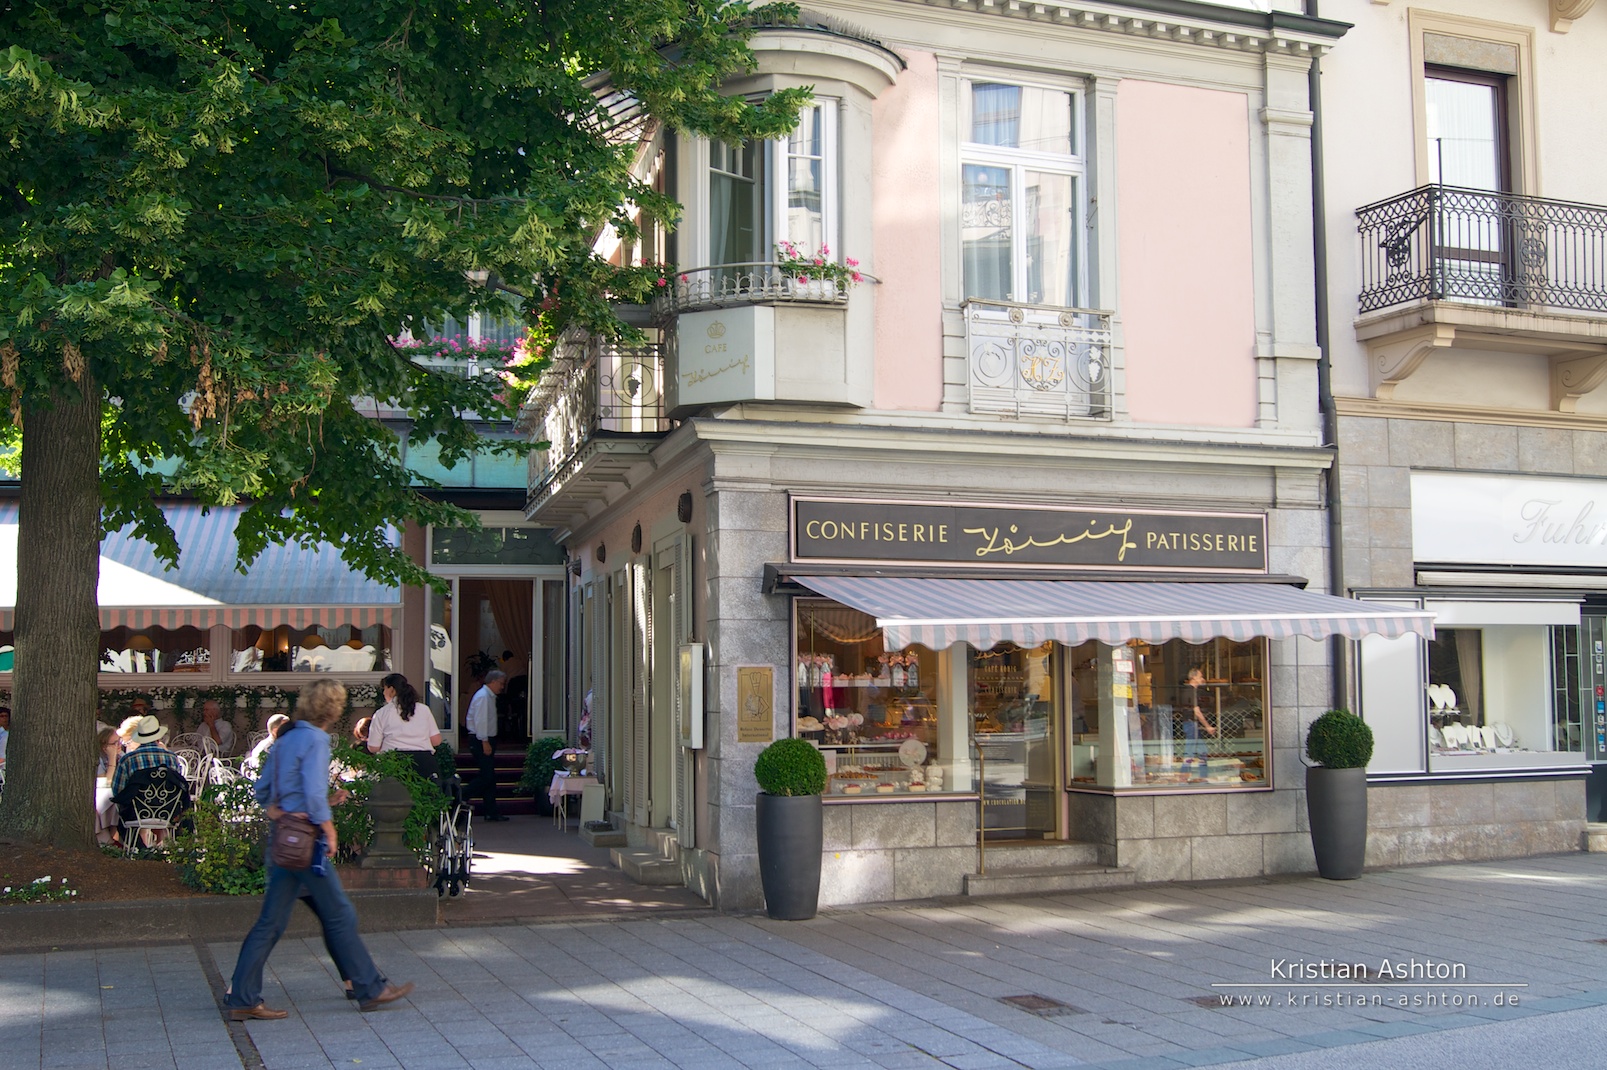 The famous Café König in Baden-Baden